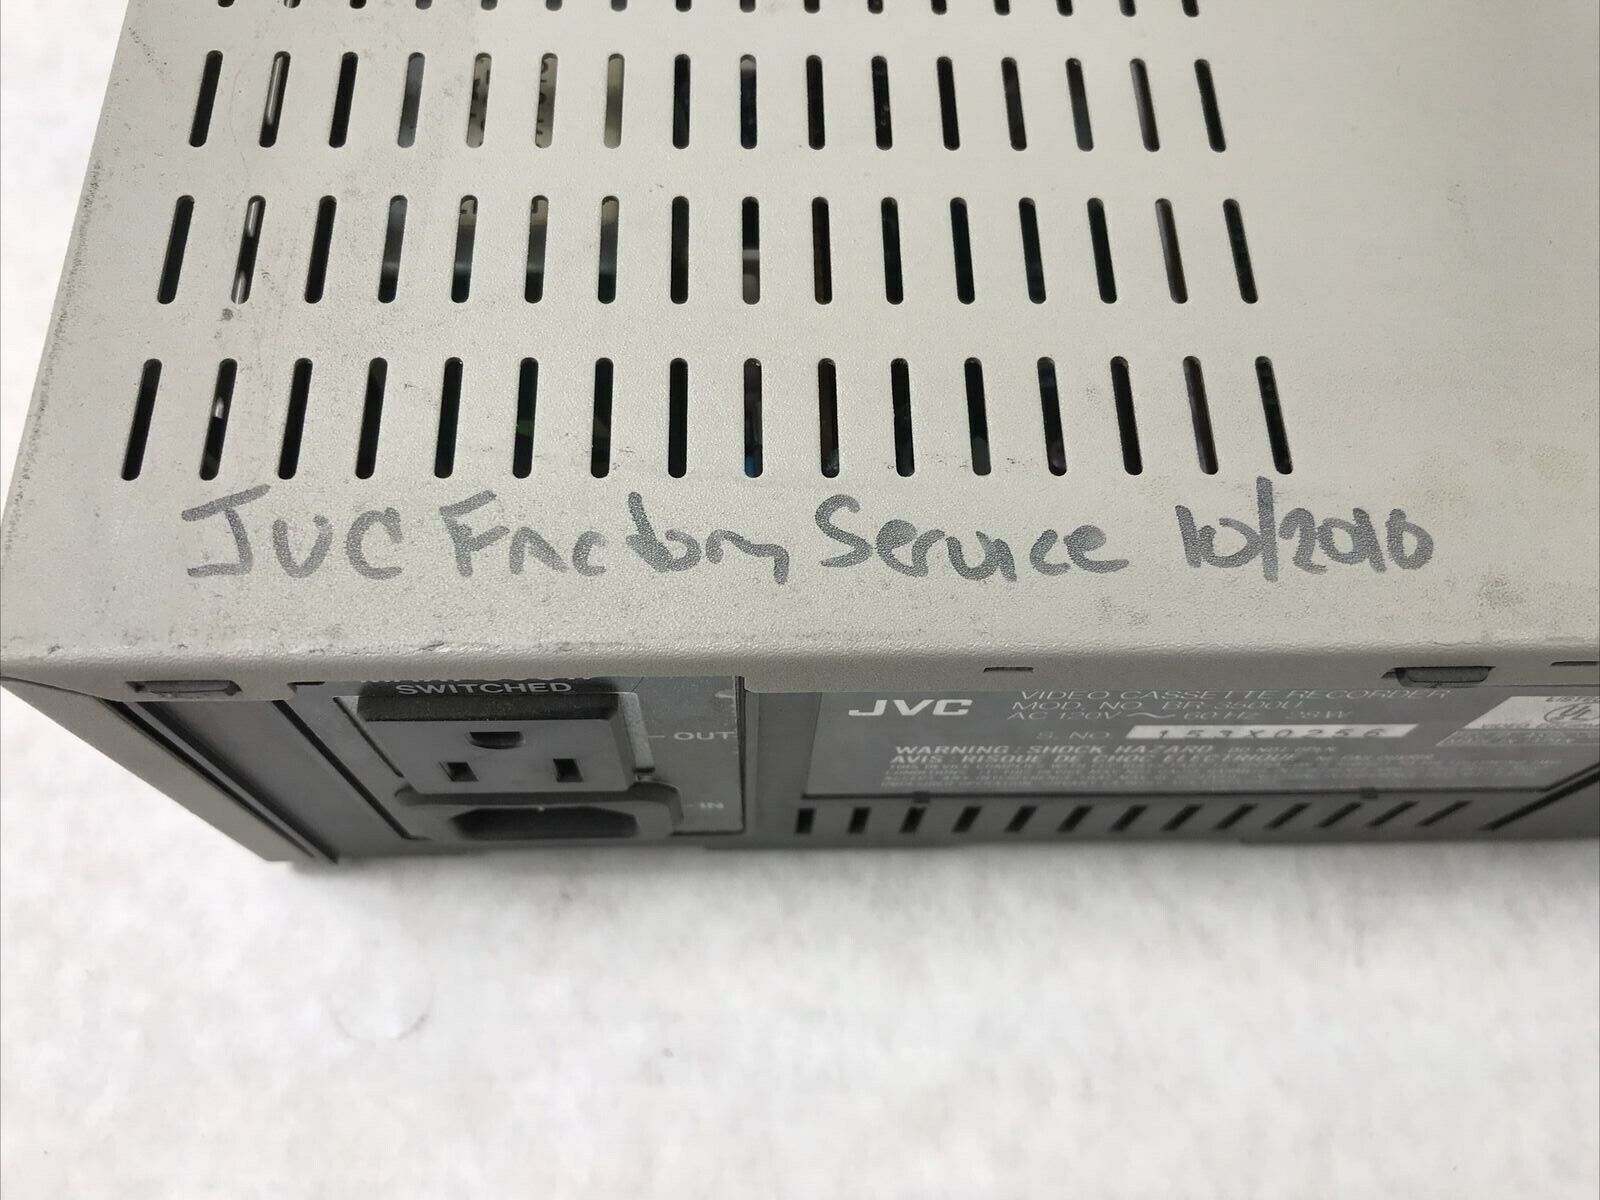 JVC BR-3500U VHS Player/Recorder Video Cassette Recorder (Untested)